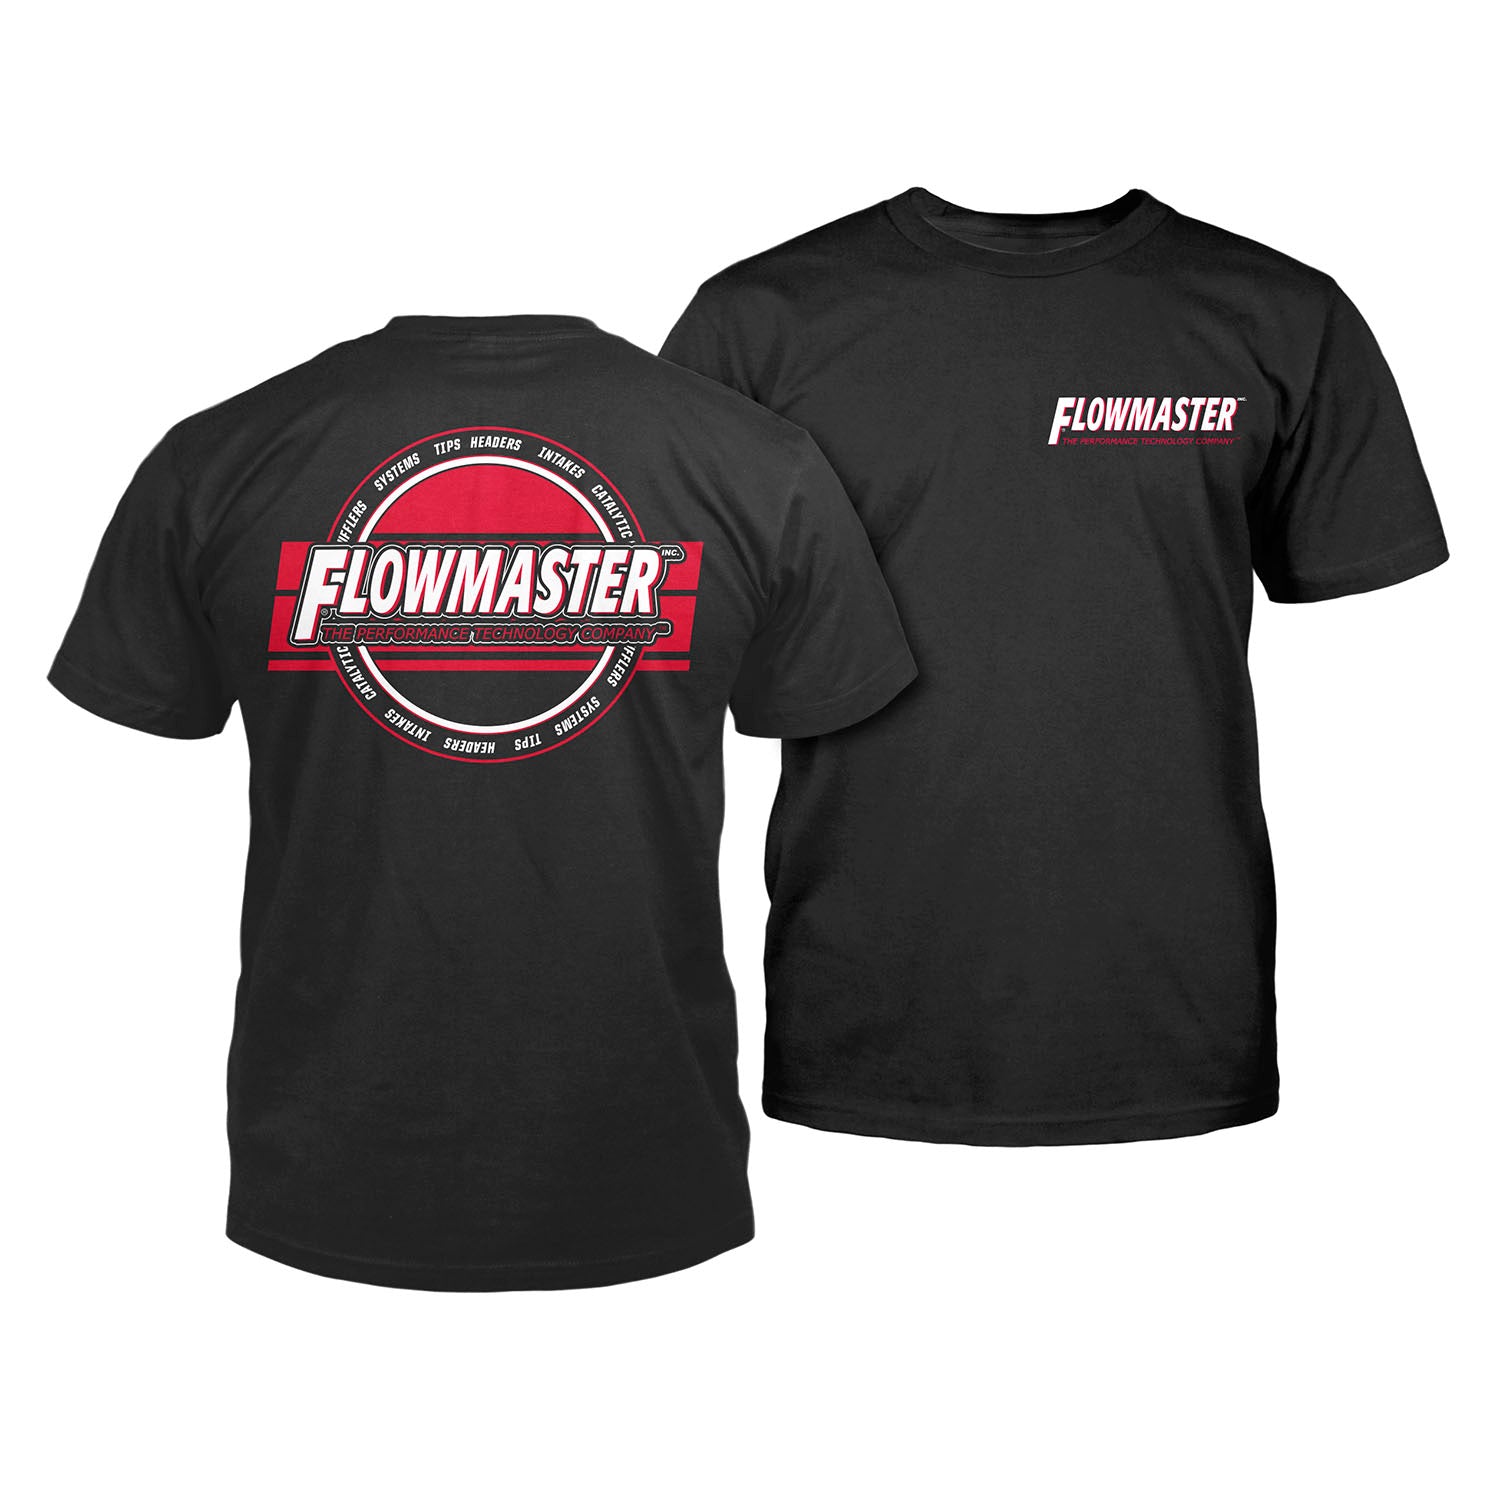 Flowmaster T-Shirt 610352